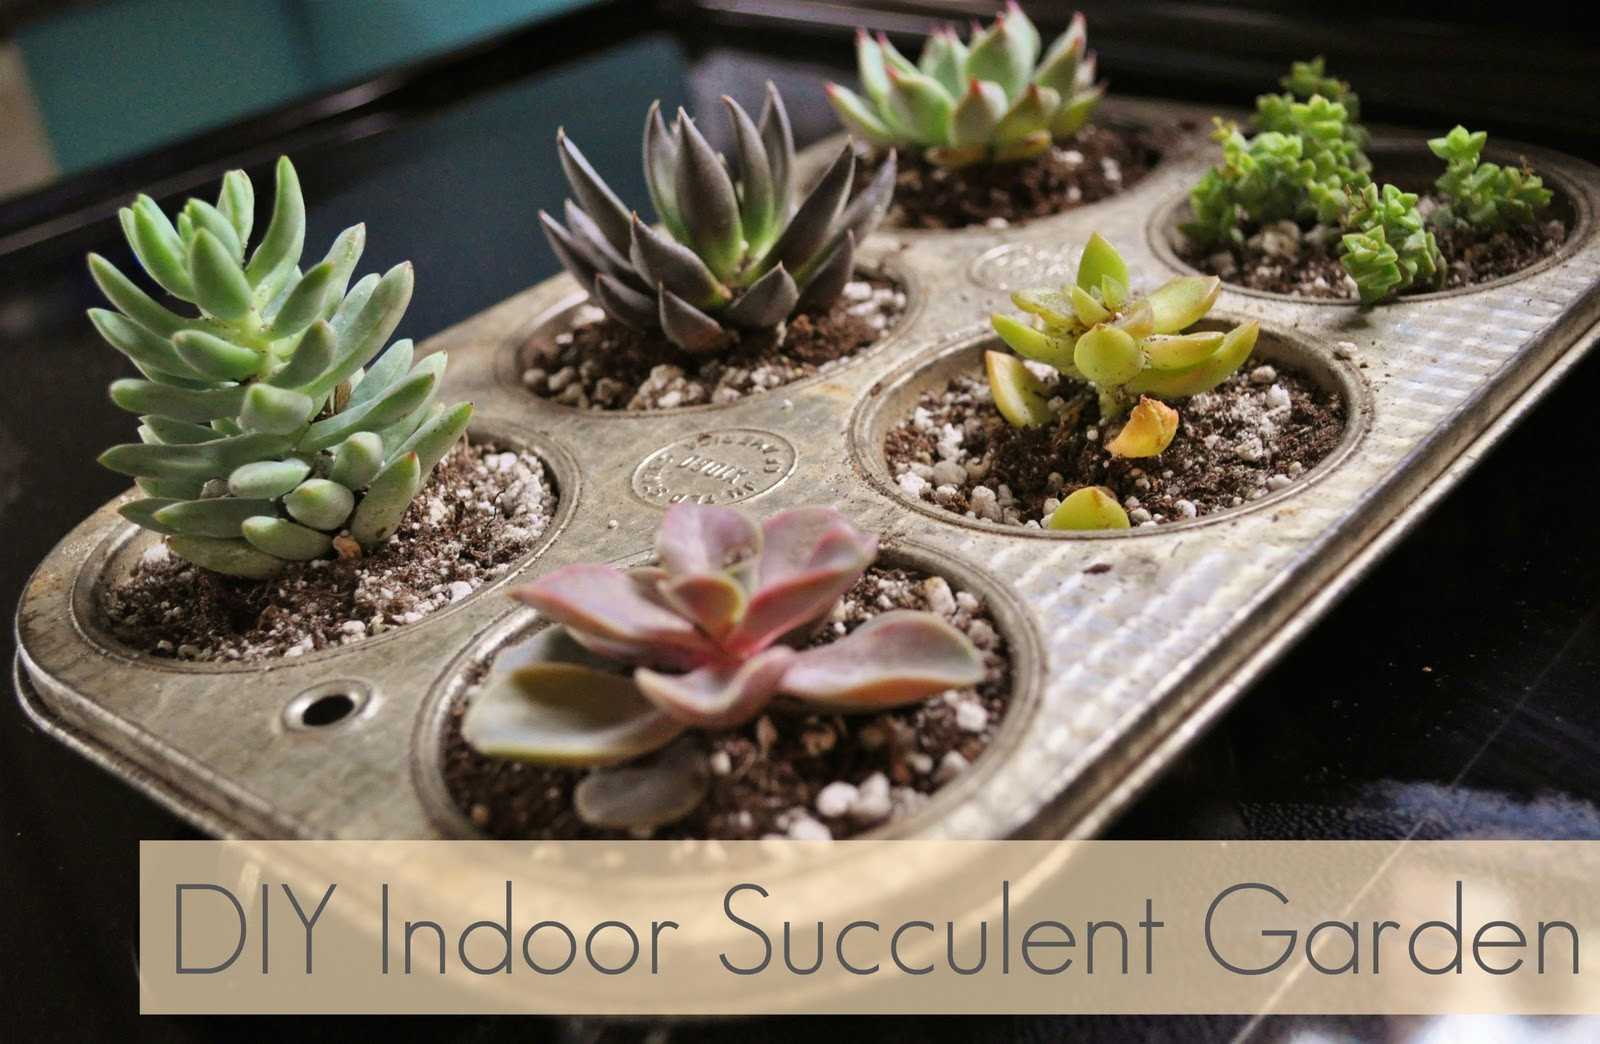 Best ideas about DIY Succulent Garden
. Save or Pin jessicaNdesigns DIY Indoor Succulent Garden Now.